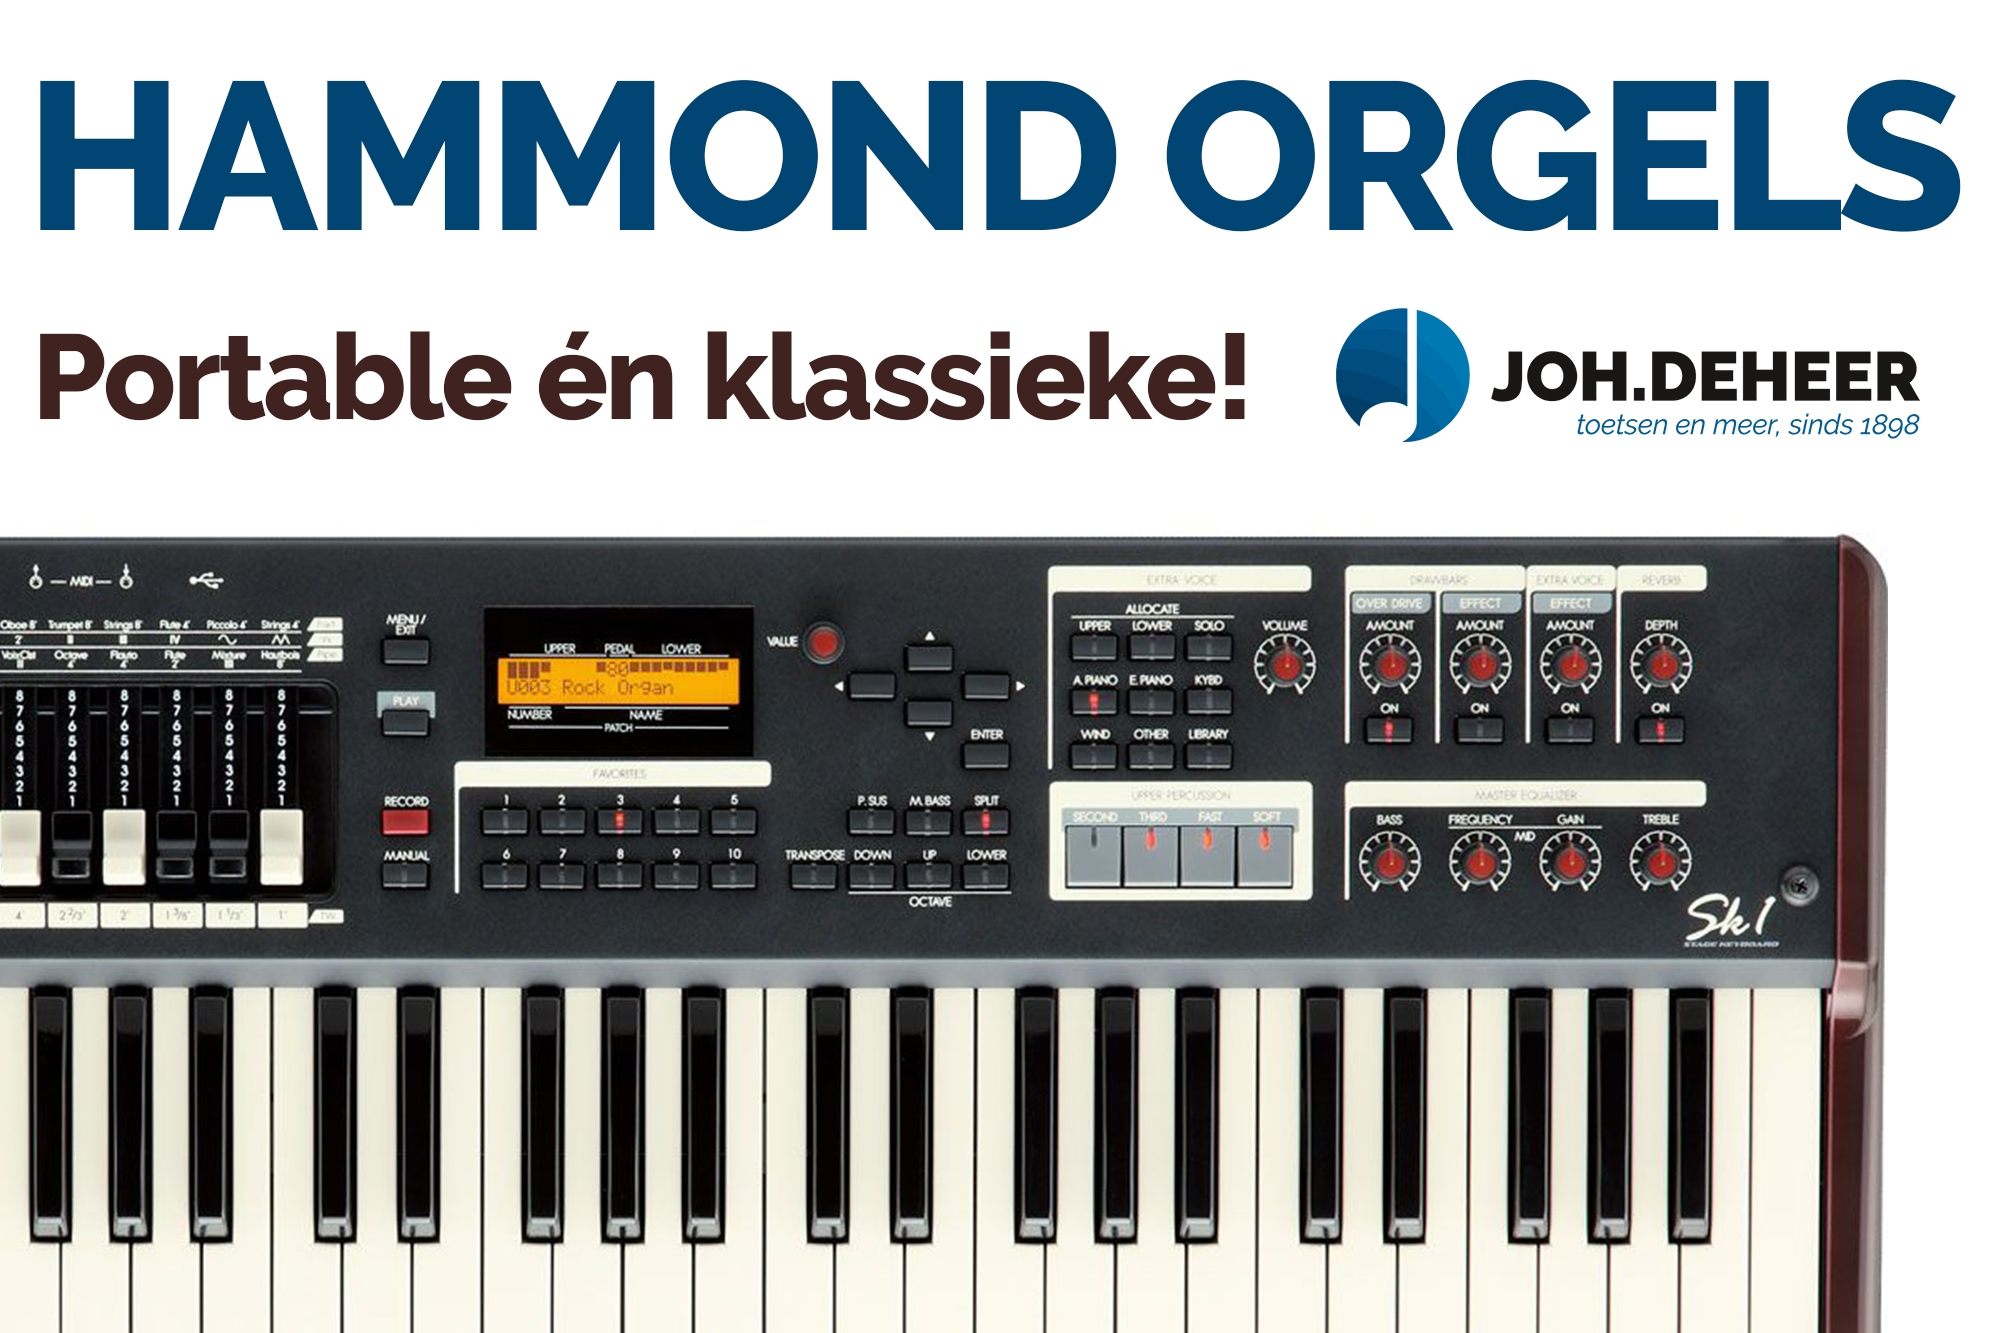 Hammond orgels